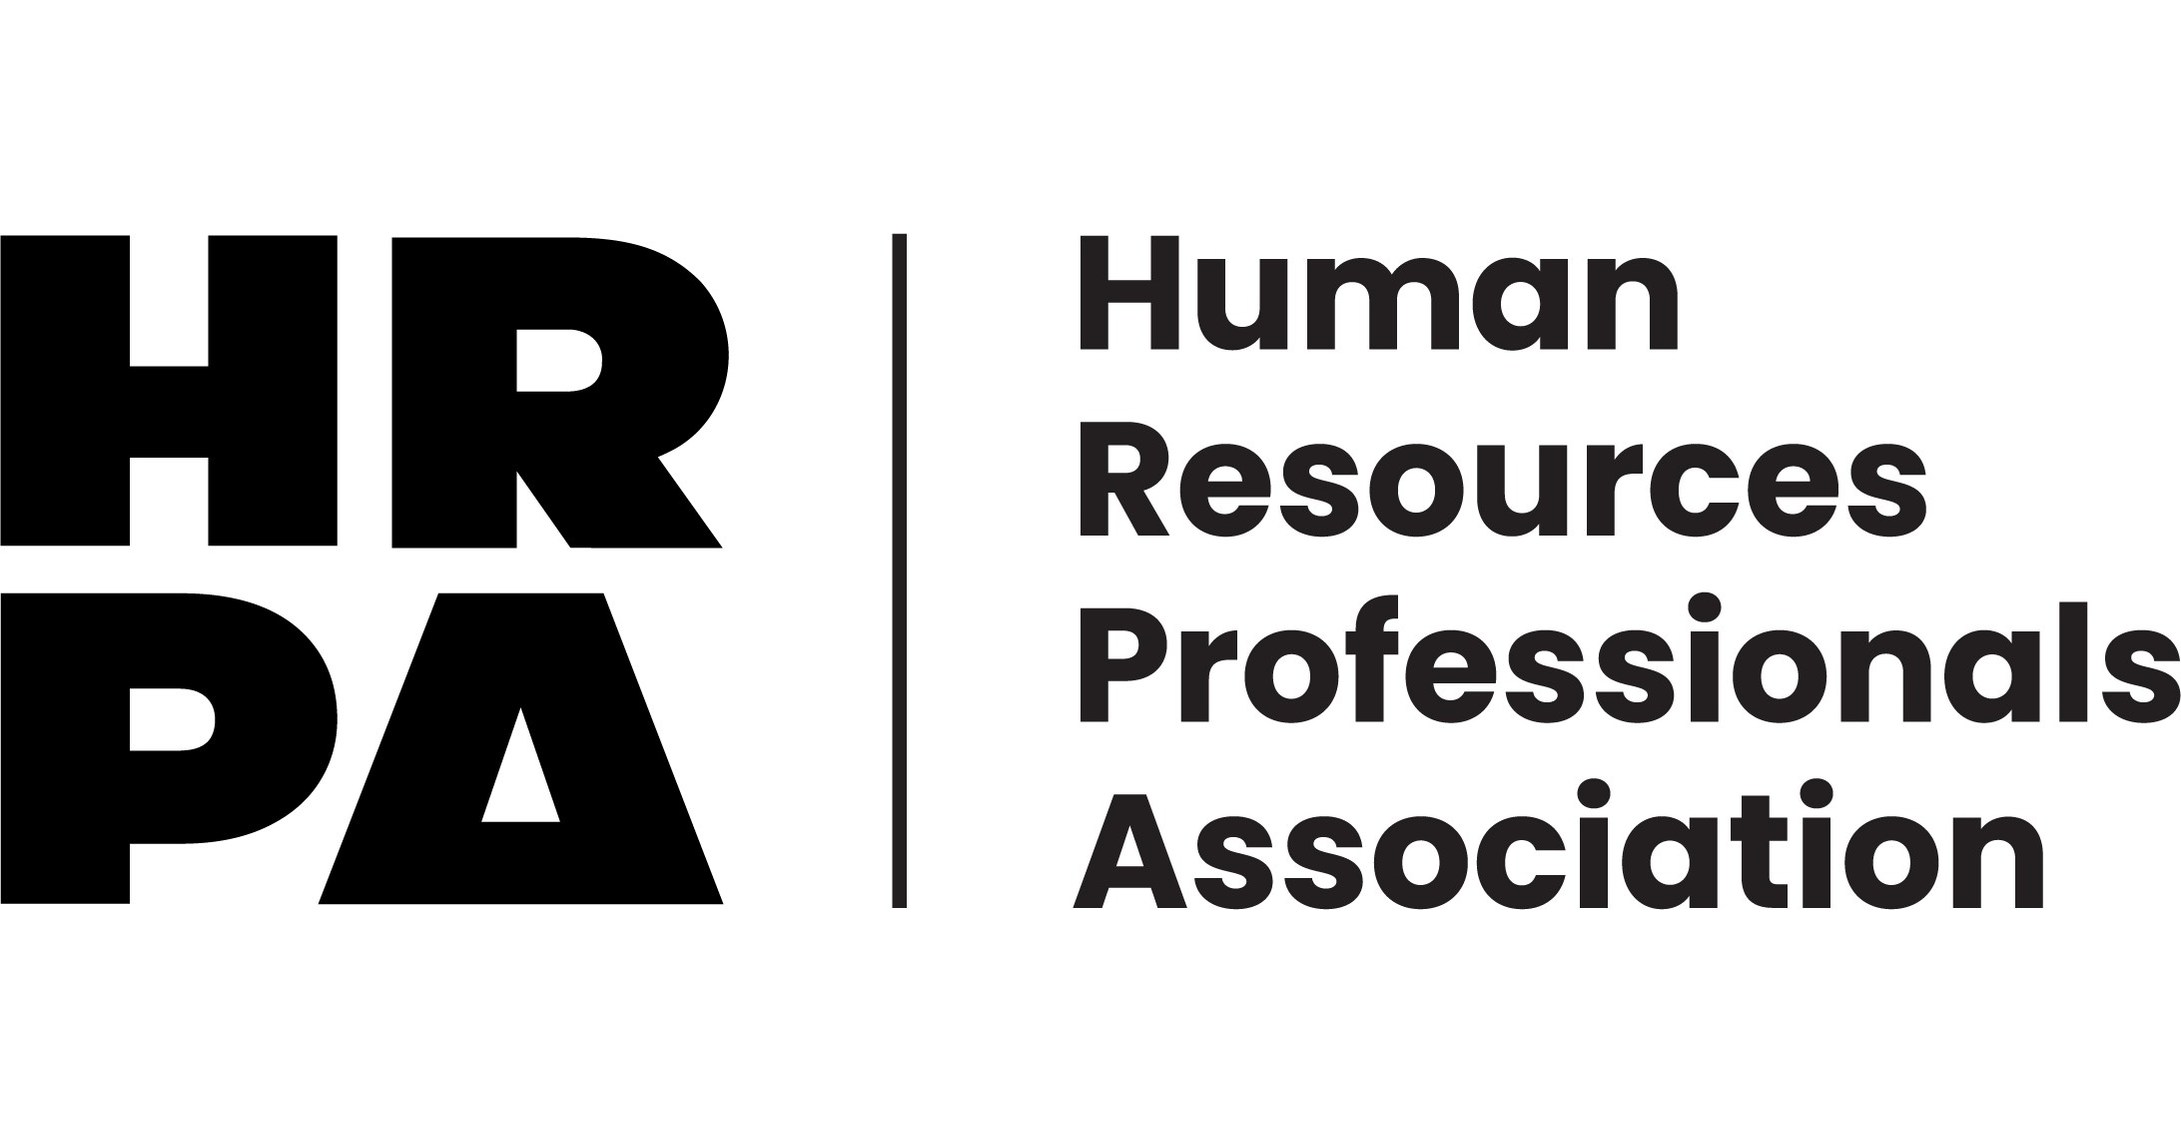 Human Resources Professional Association